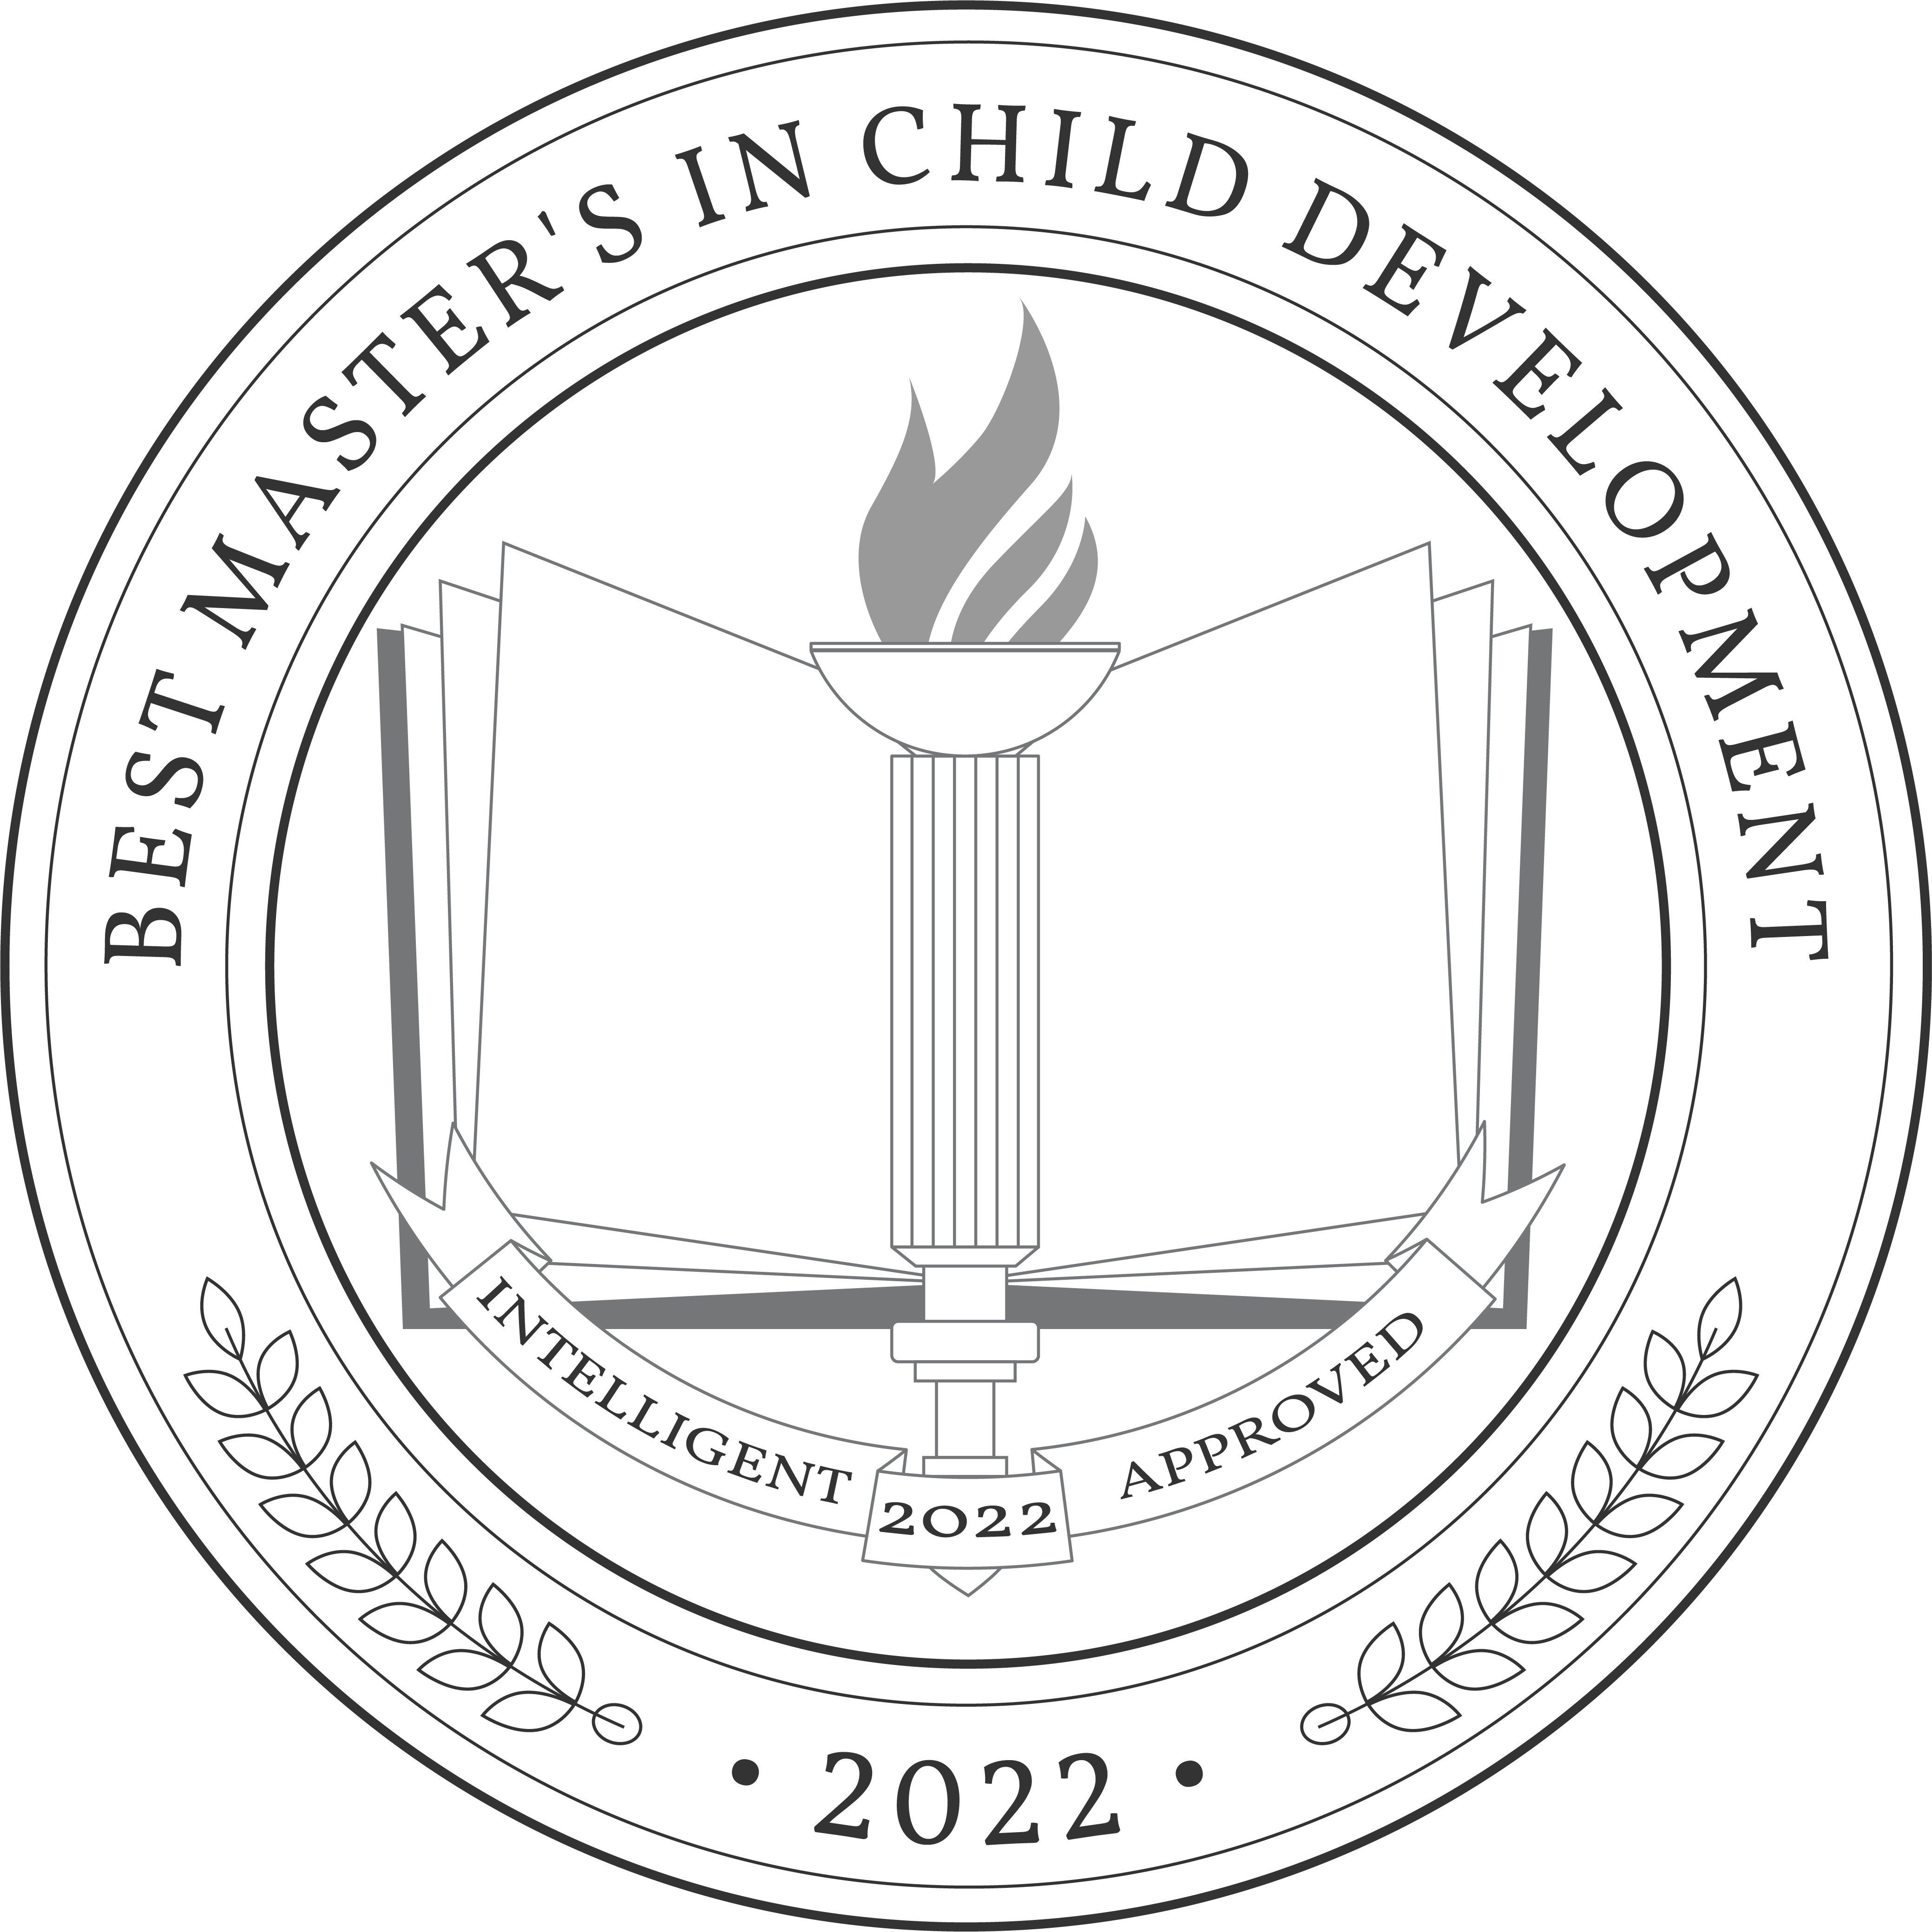 Best Online Master's in Child Development Degree Programs